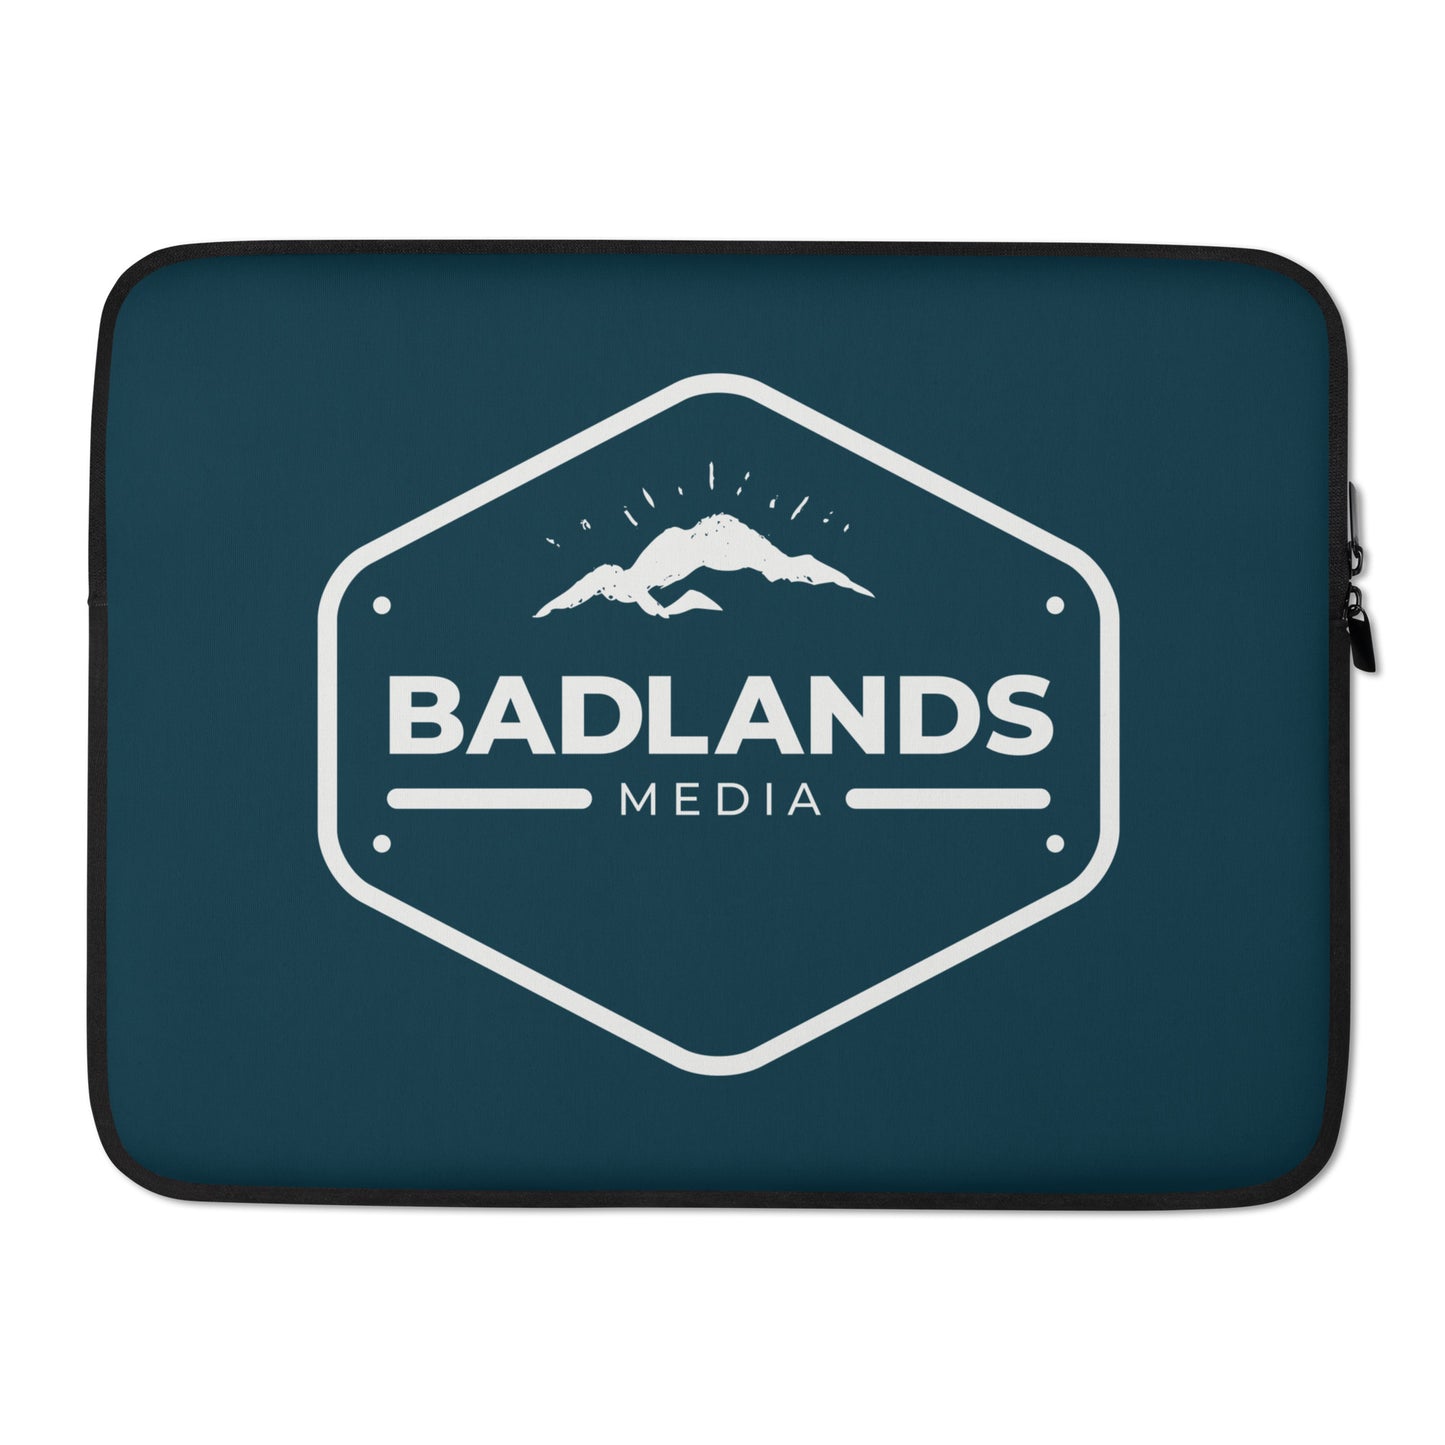 Badlands Laptop Sleeve in admiral blue